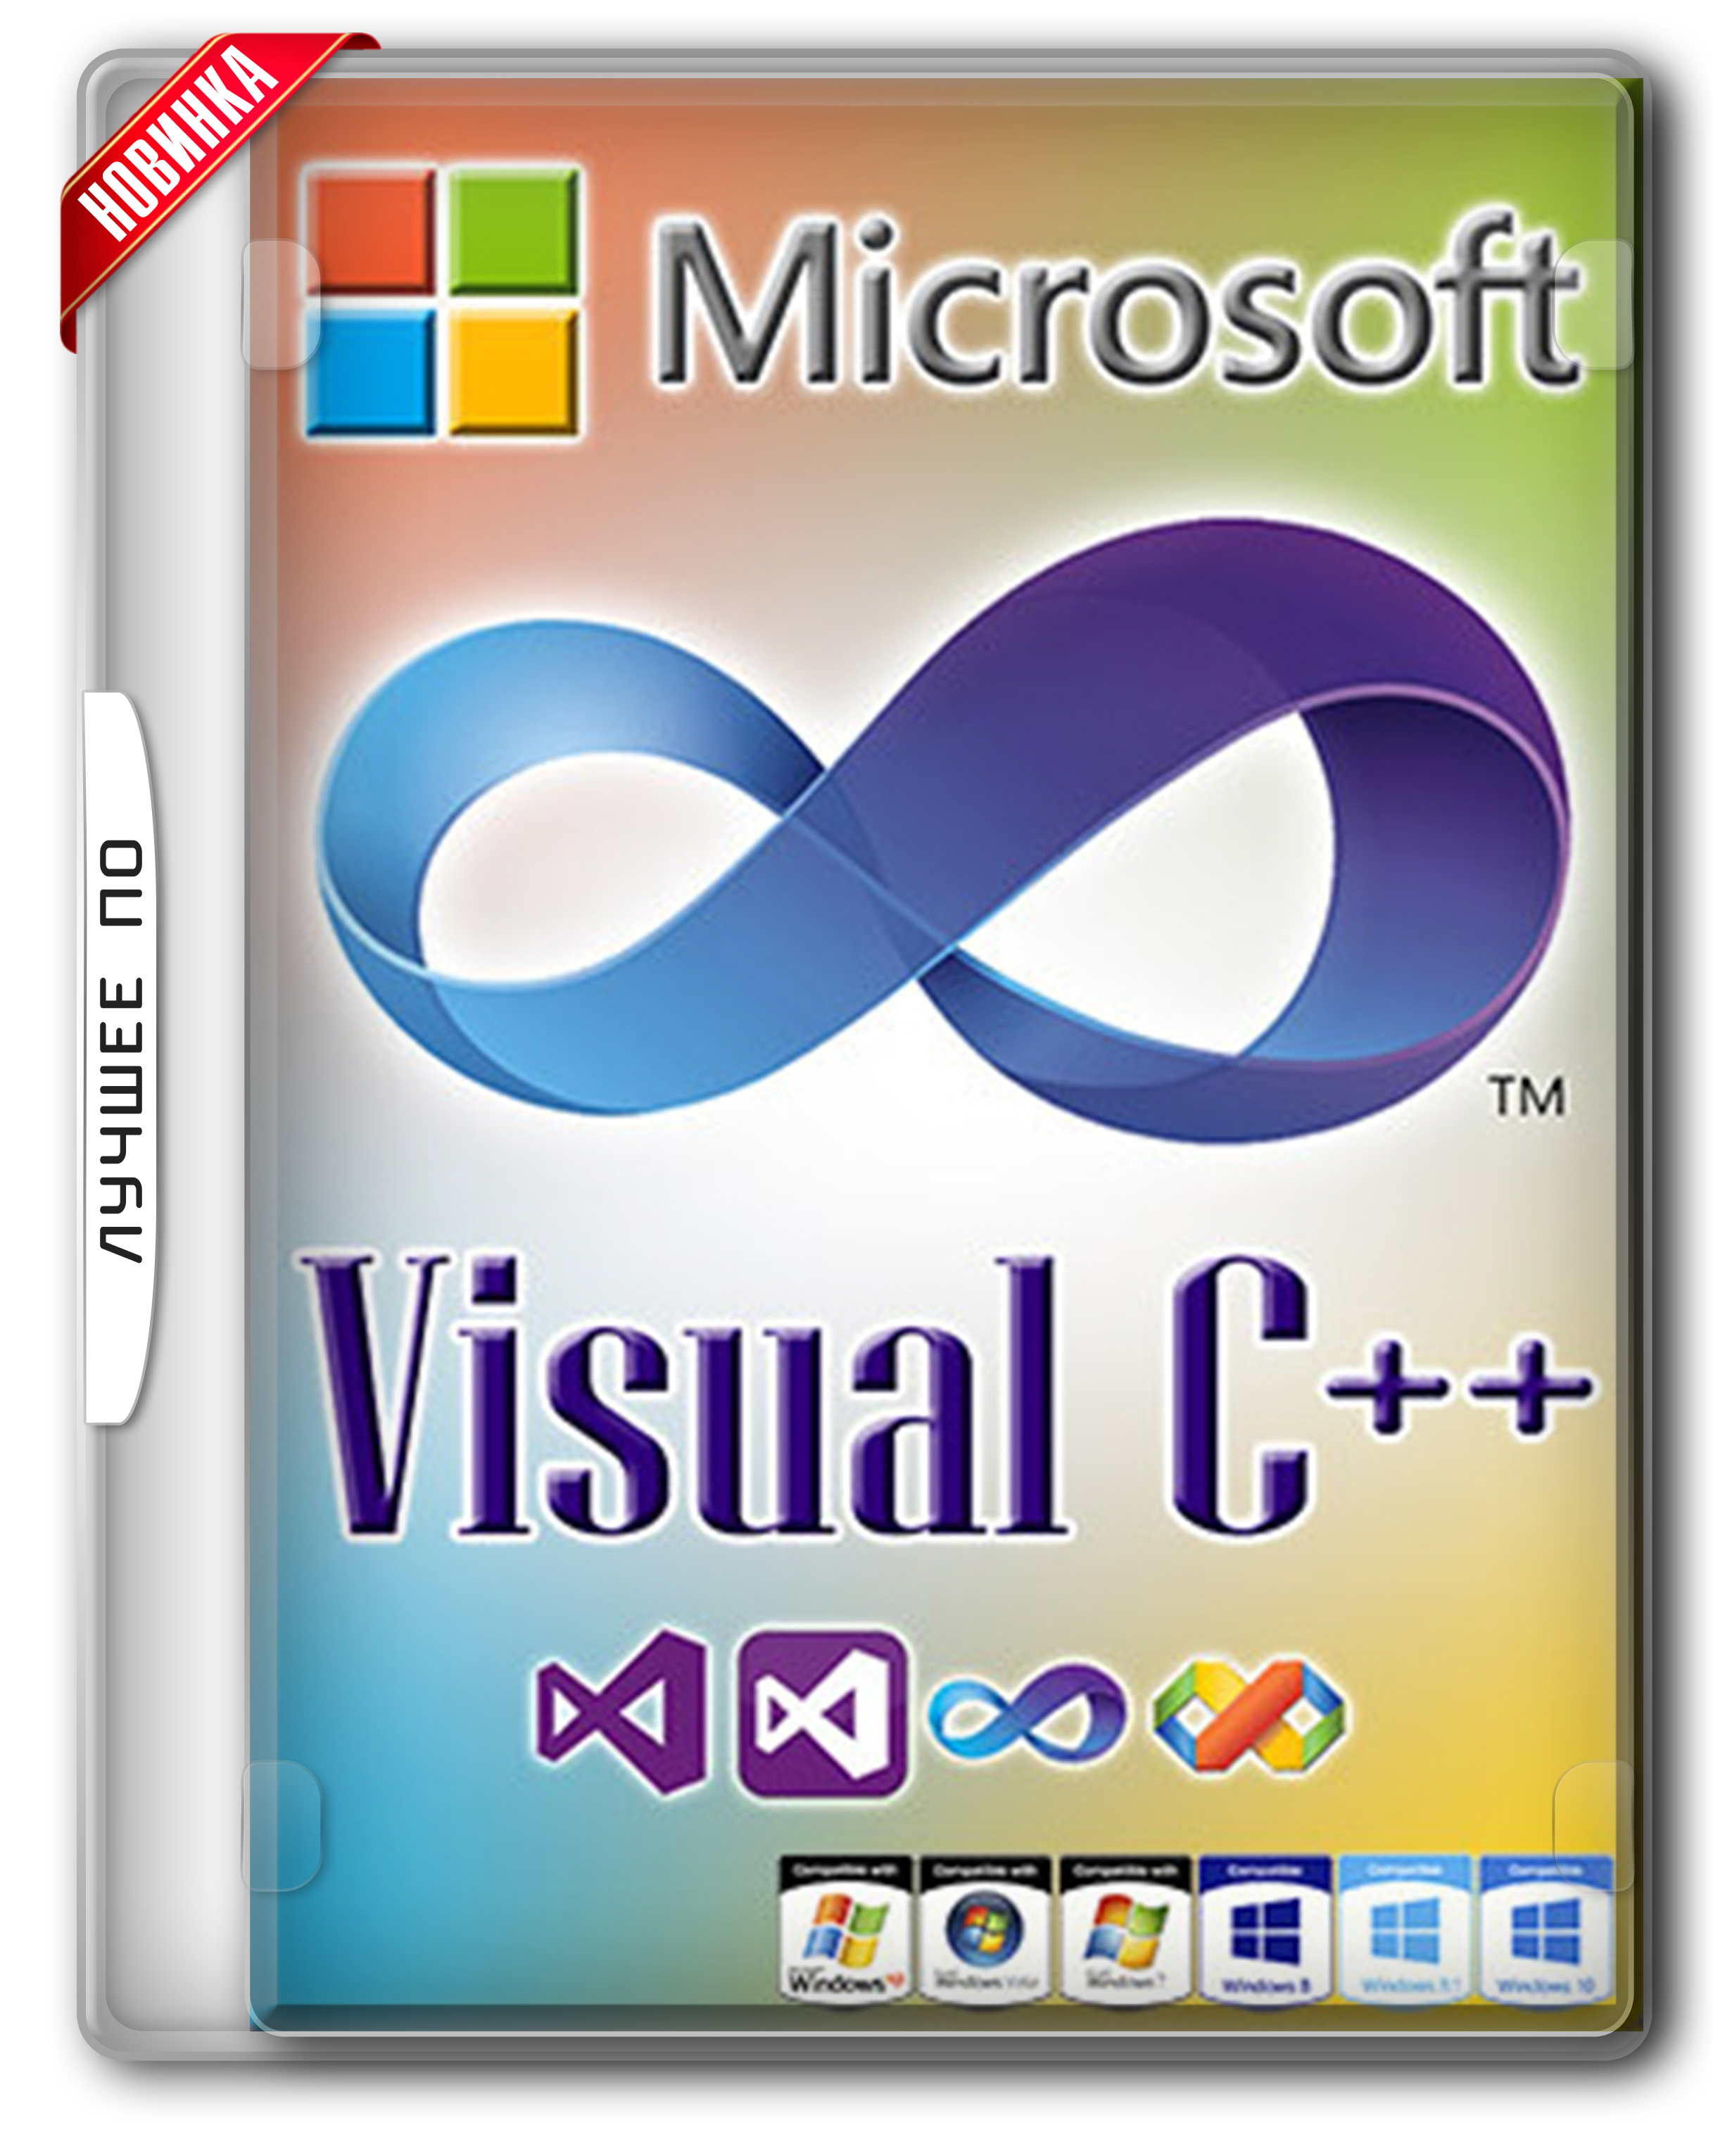 Redistributable package x86 x64. Microsoft Visual c++ 2015-2019. Microsoft Visual c++ 2019 x64 14.27.29016. Microsoft Visual c++ 2005. Визуал c++.